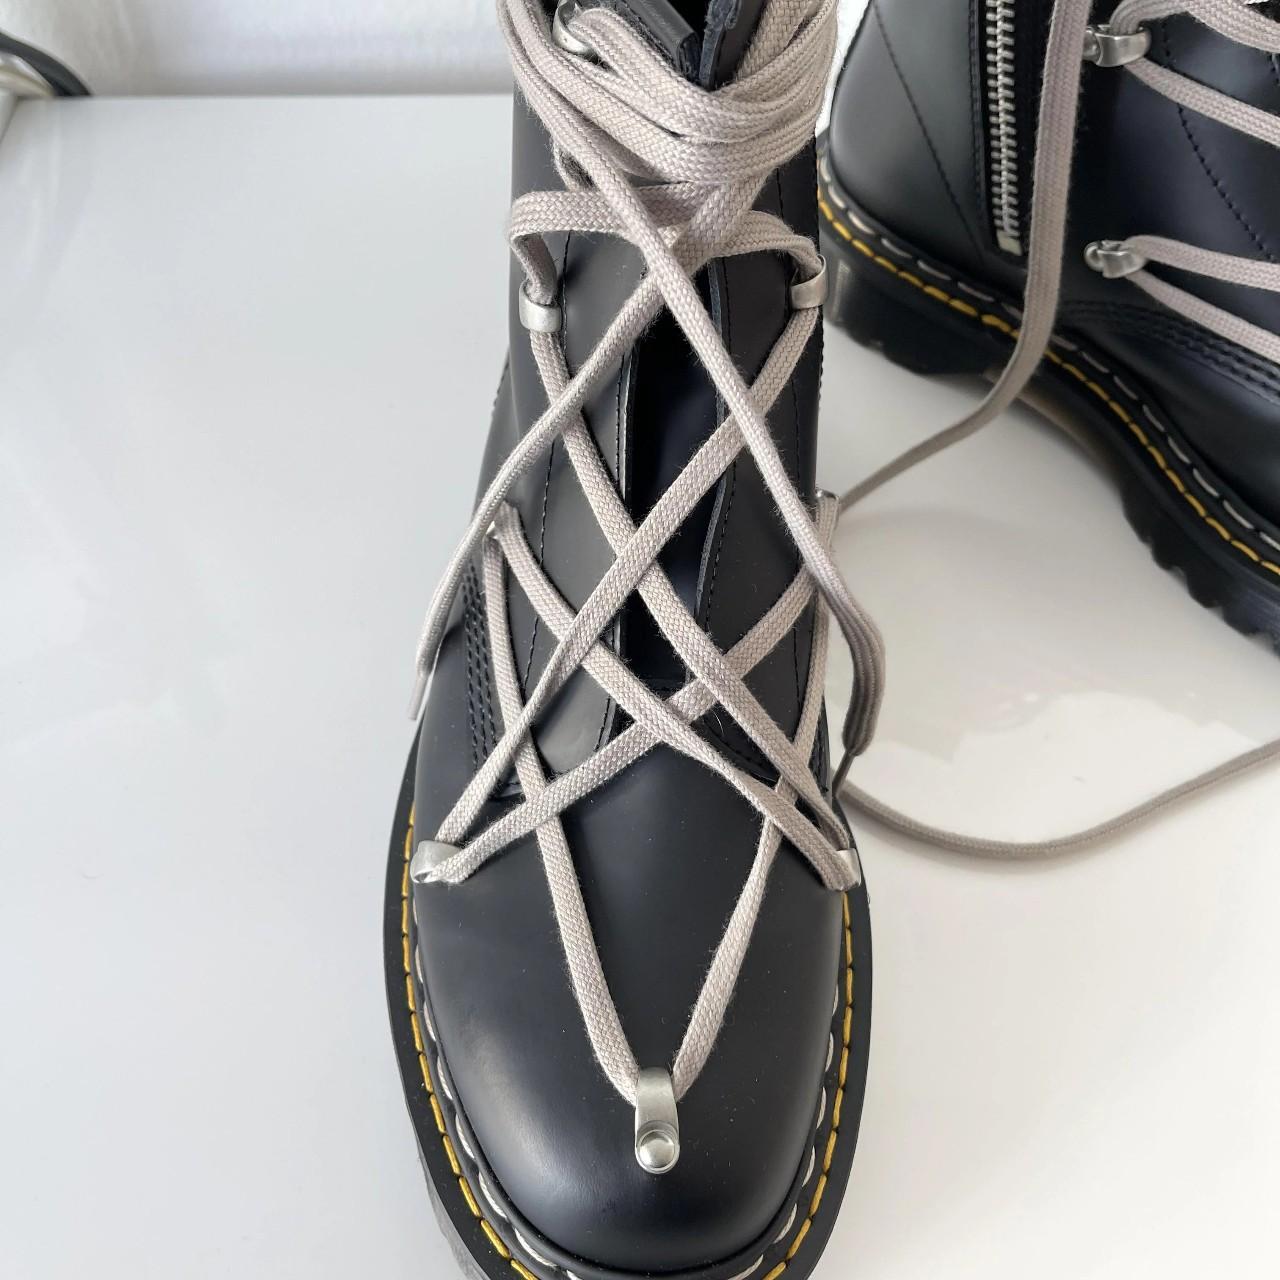 Rick Owens X Dr Martens 1460 bex boots Size... - Depop